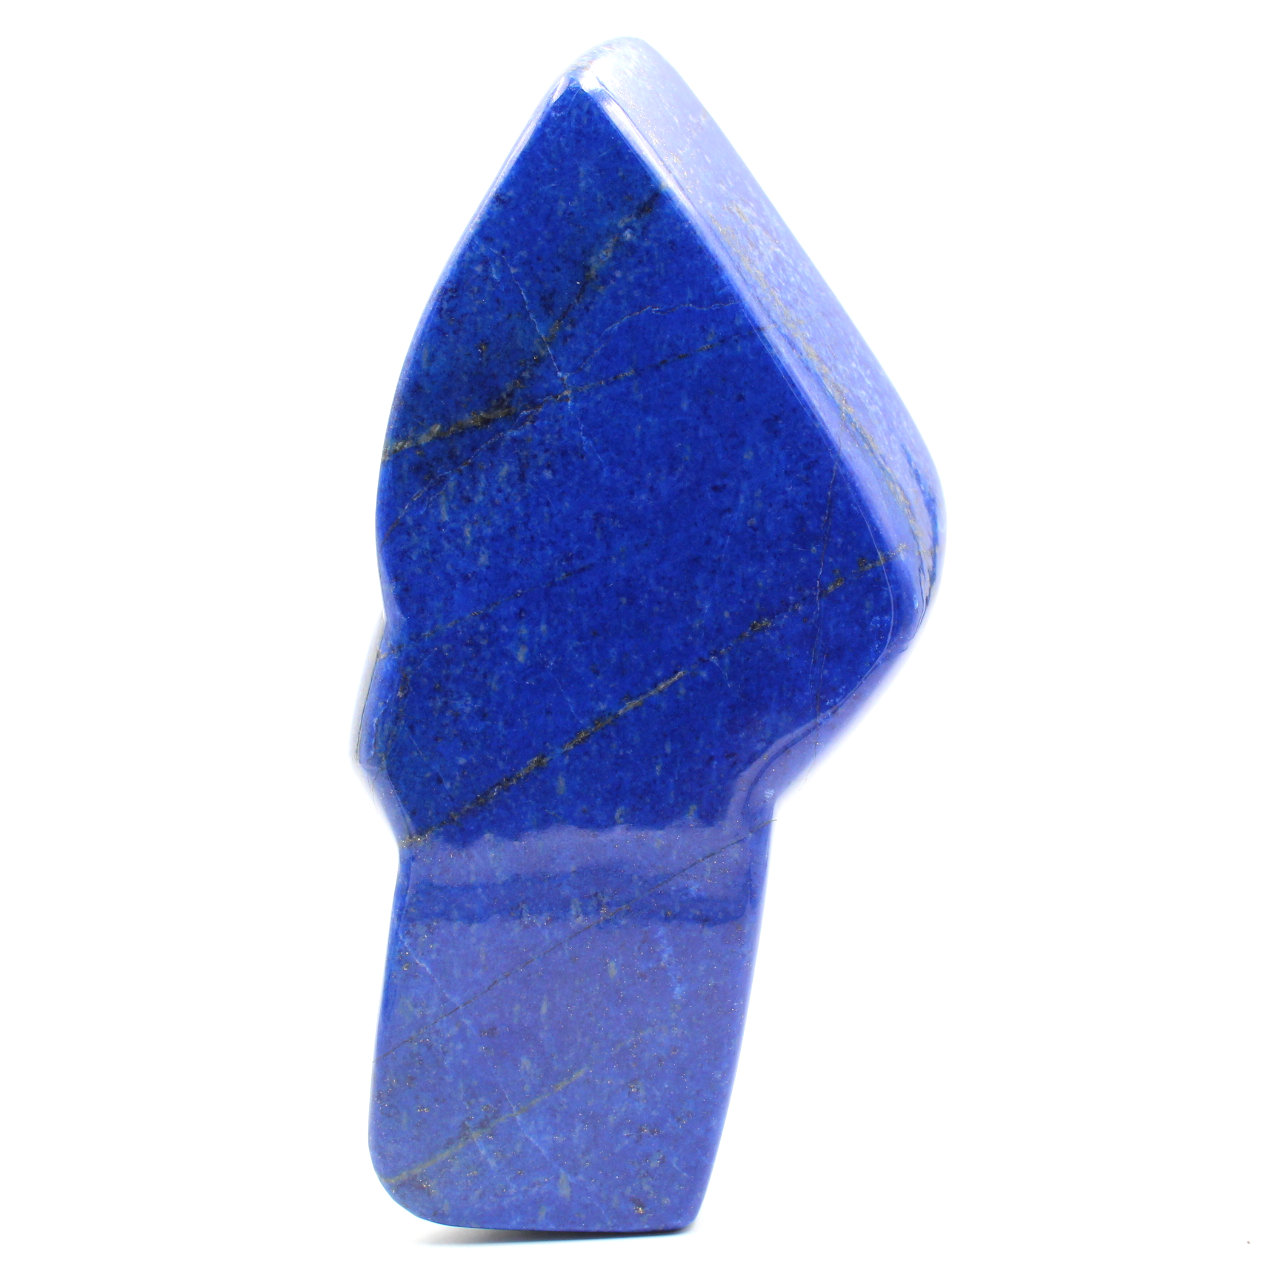 Lapis Lazuli bloco de pedra ornamental forma abstrata